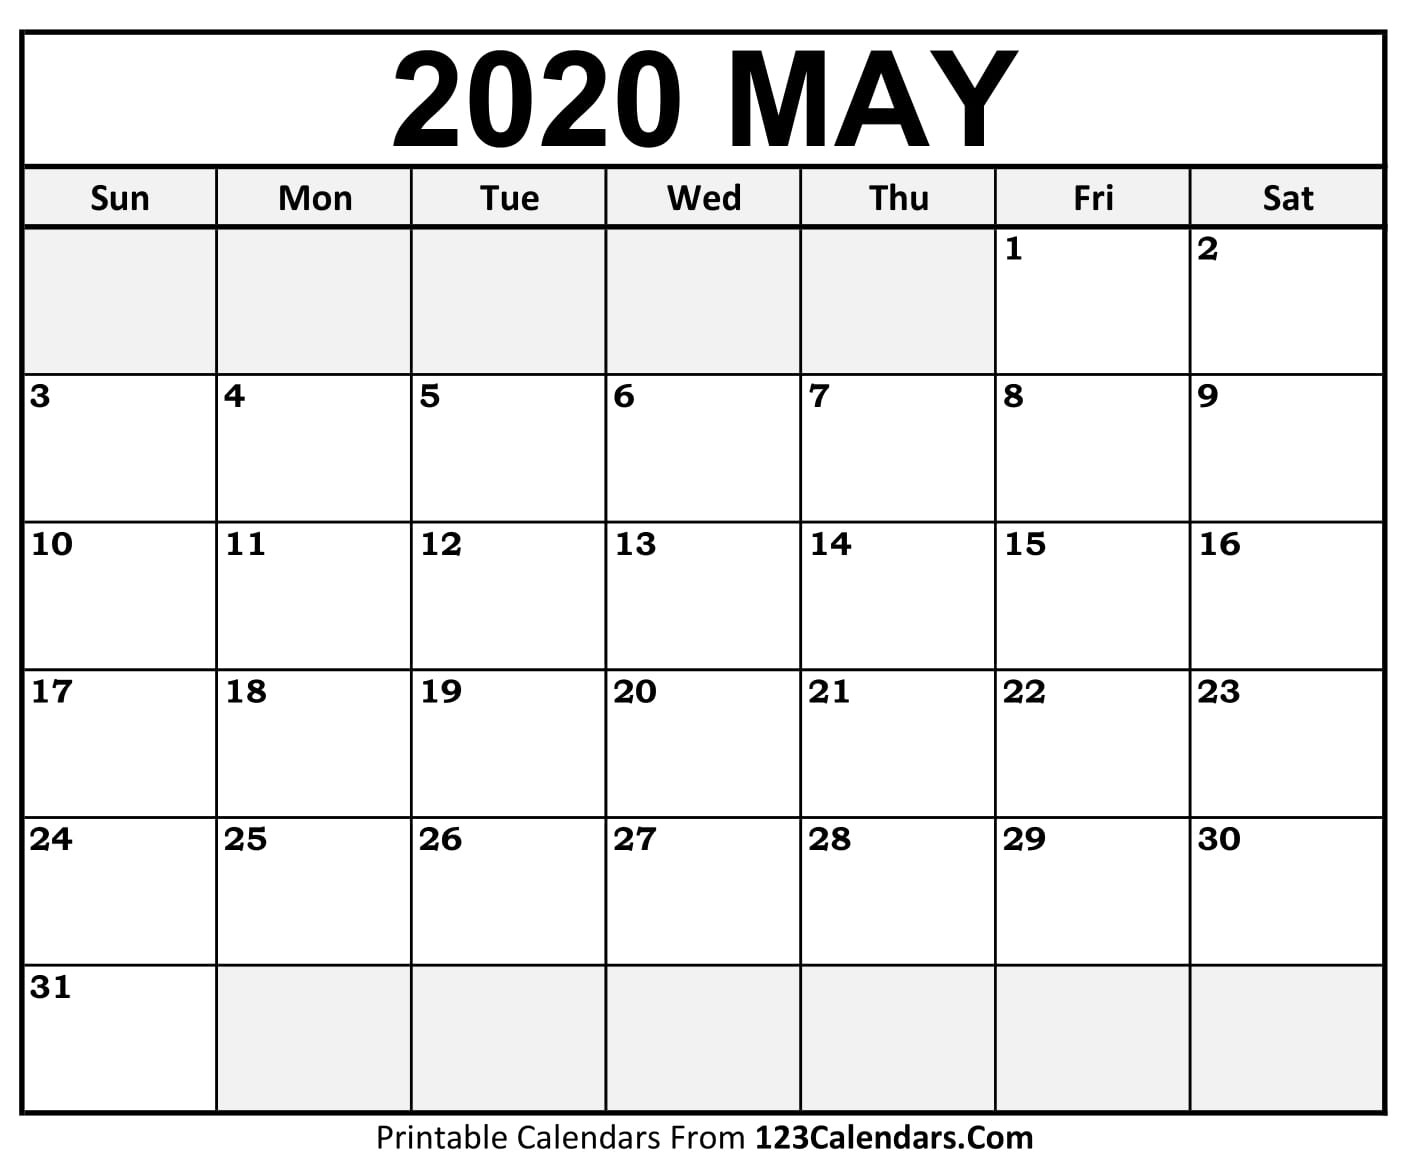 Printable May 2020 Calendar Templates | 123Calendars  May 2020 Calendar Printable